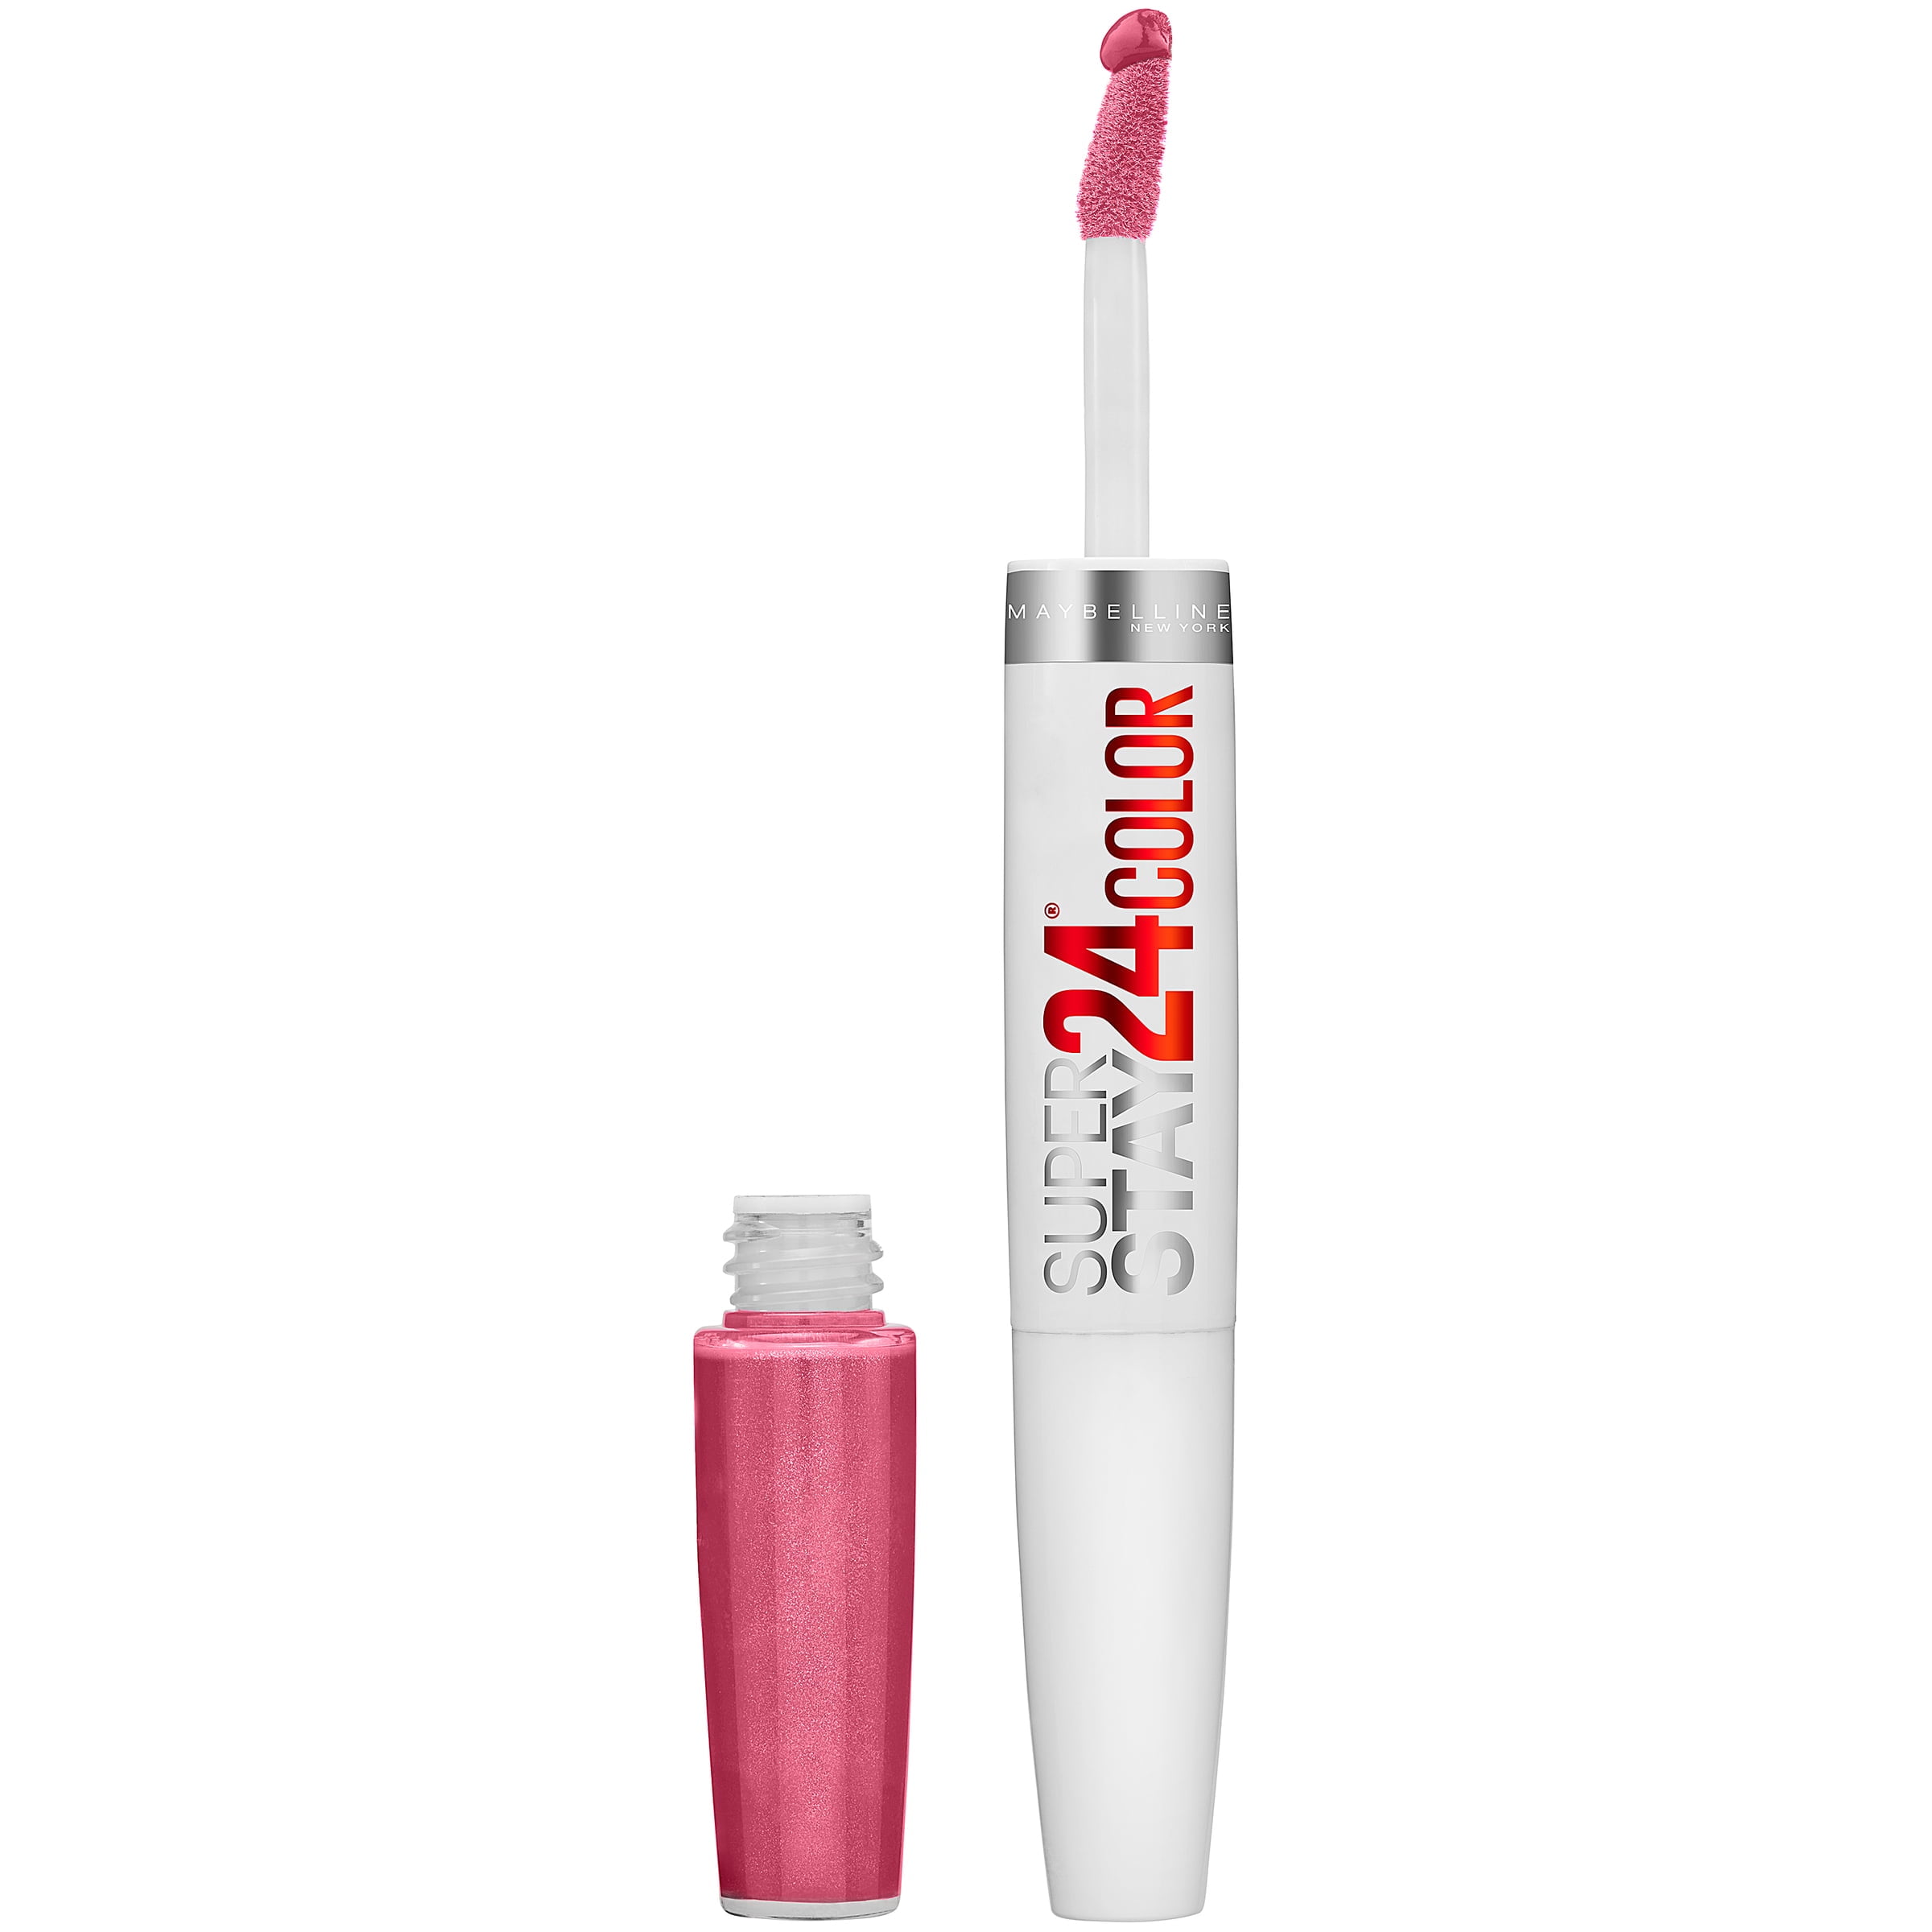 Glisten Cosmetics Liner Brush | 4 0.17 oz